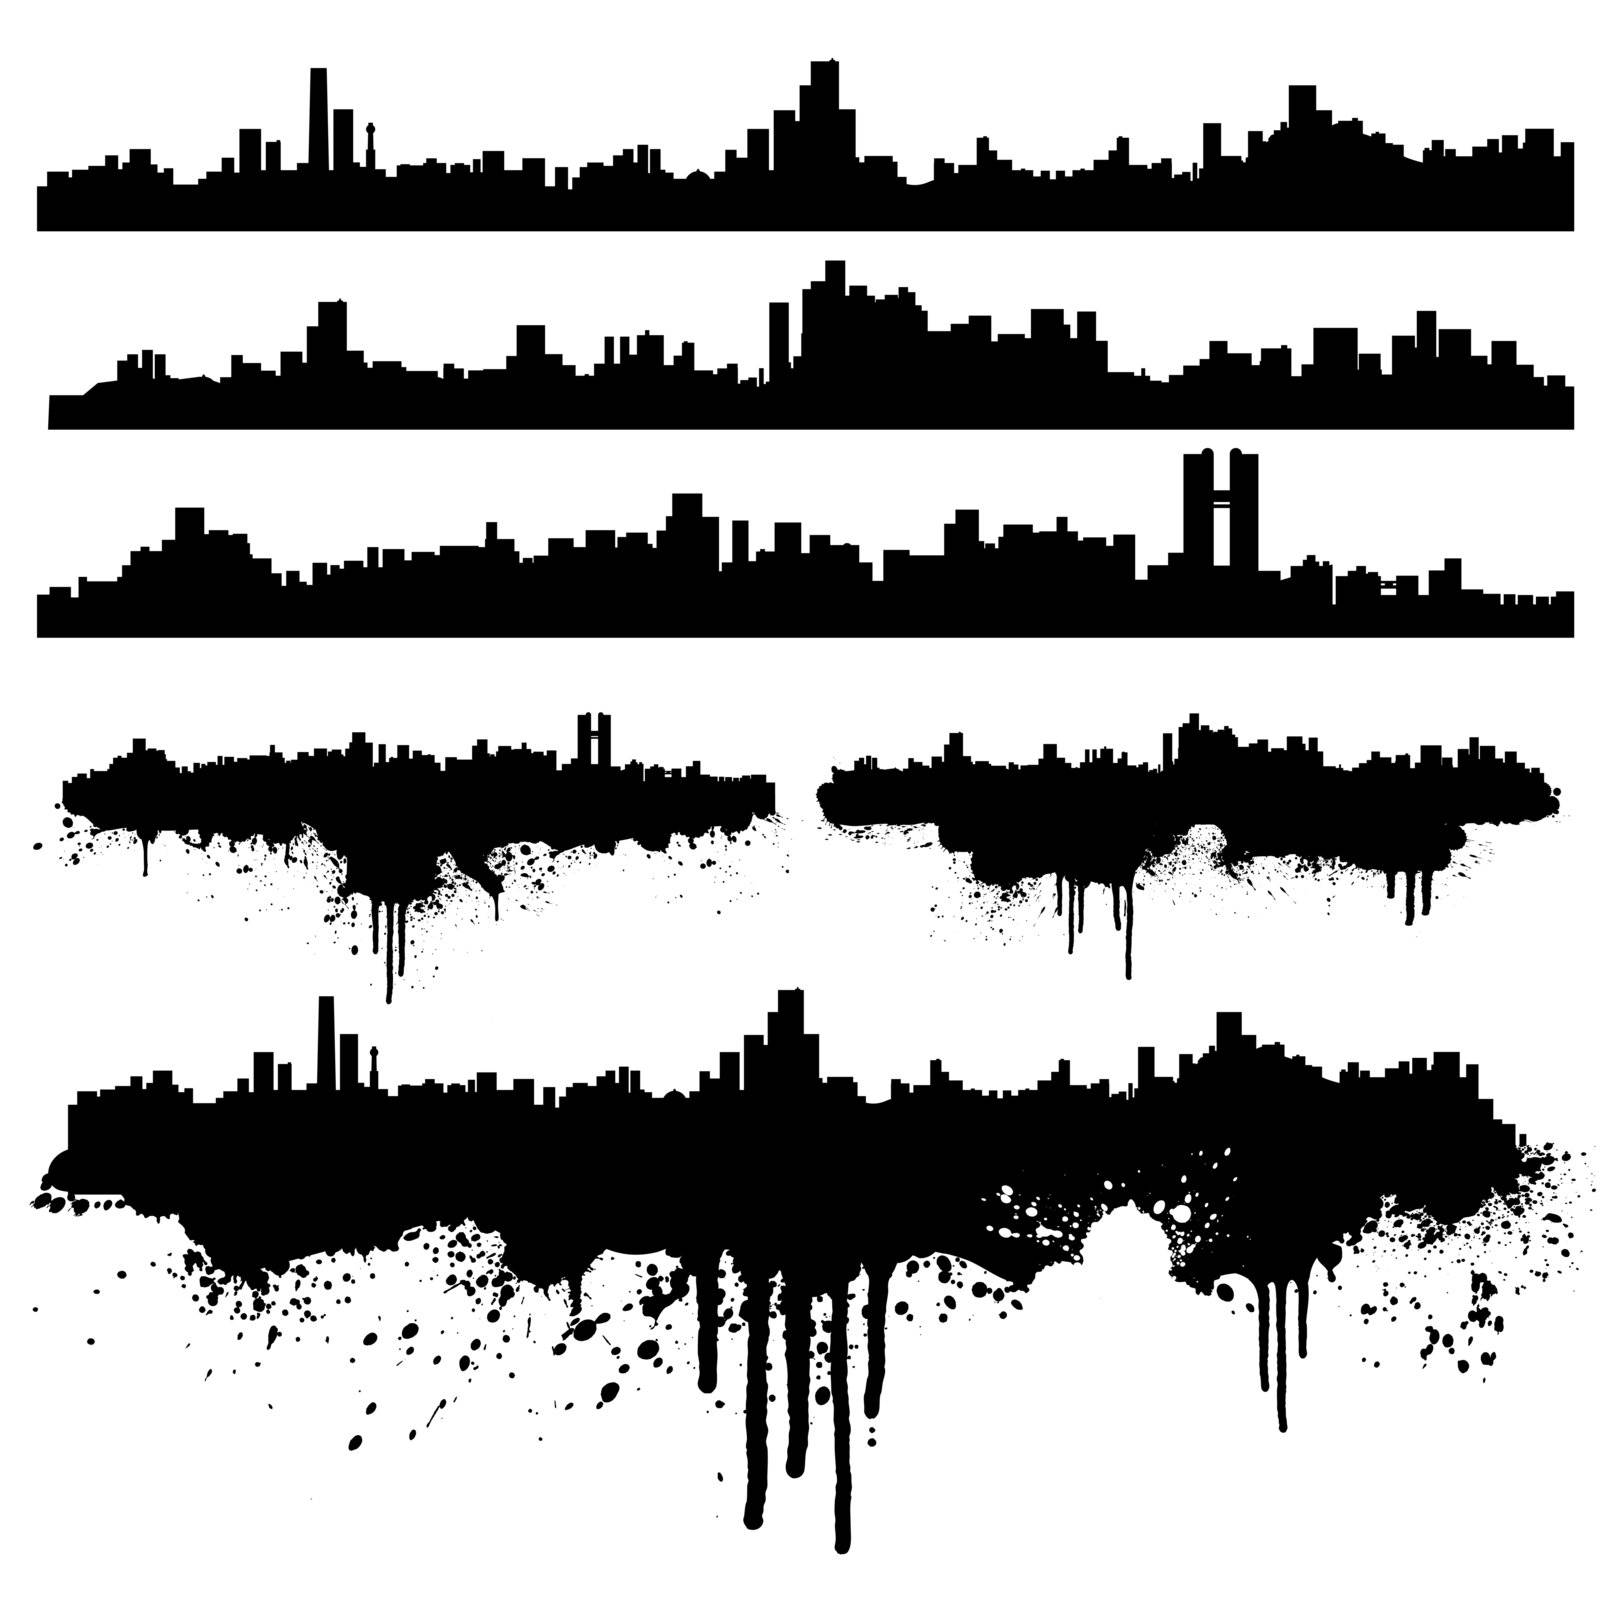 Urban skylines splatter collection by domencolja